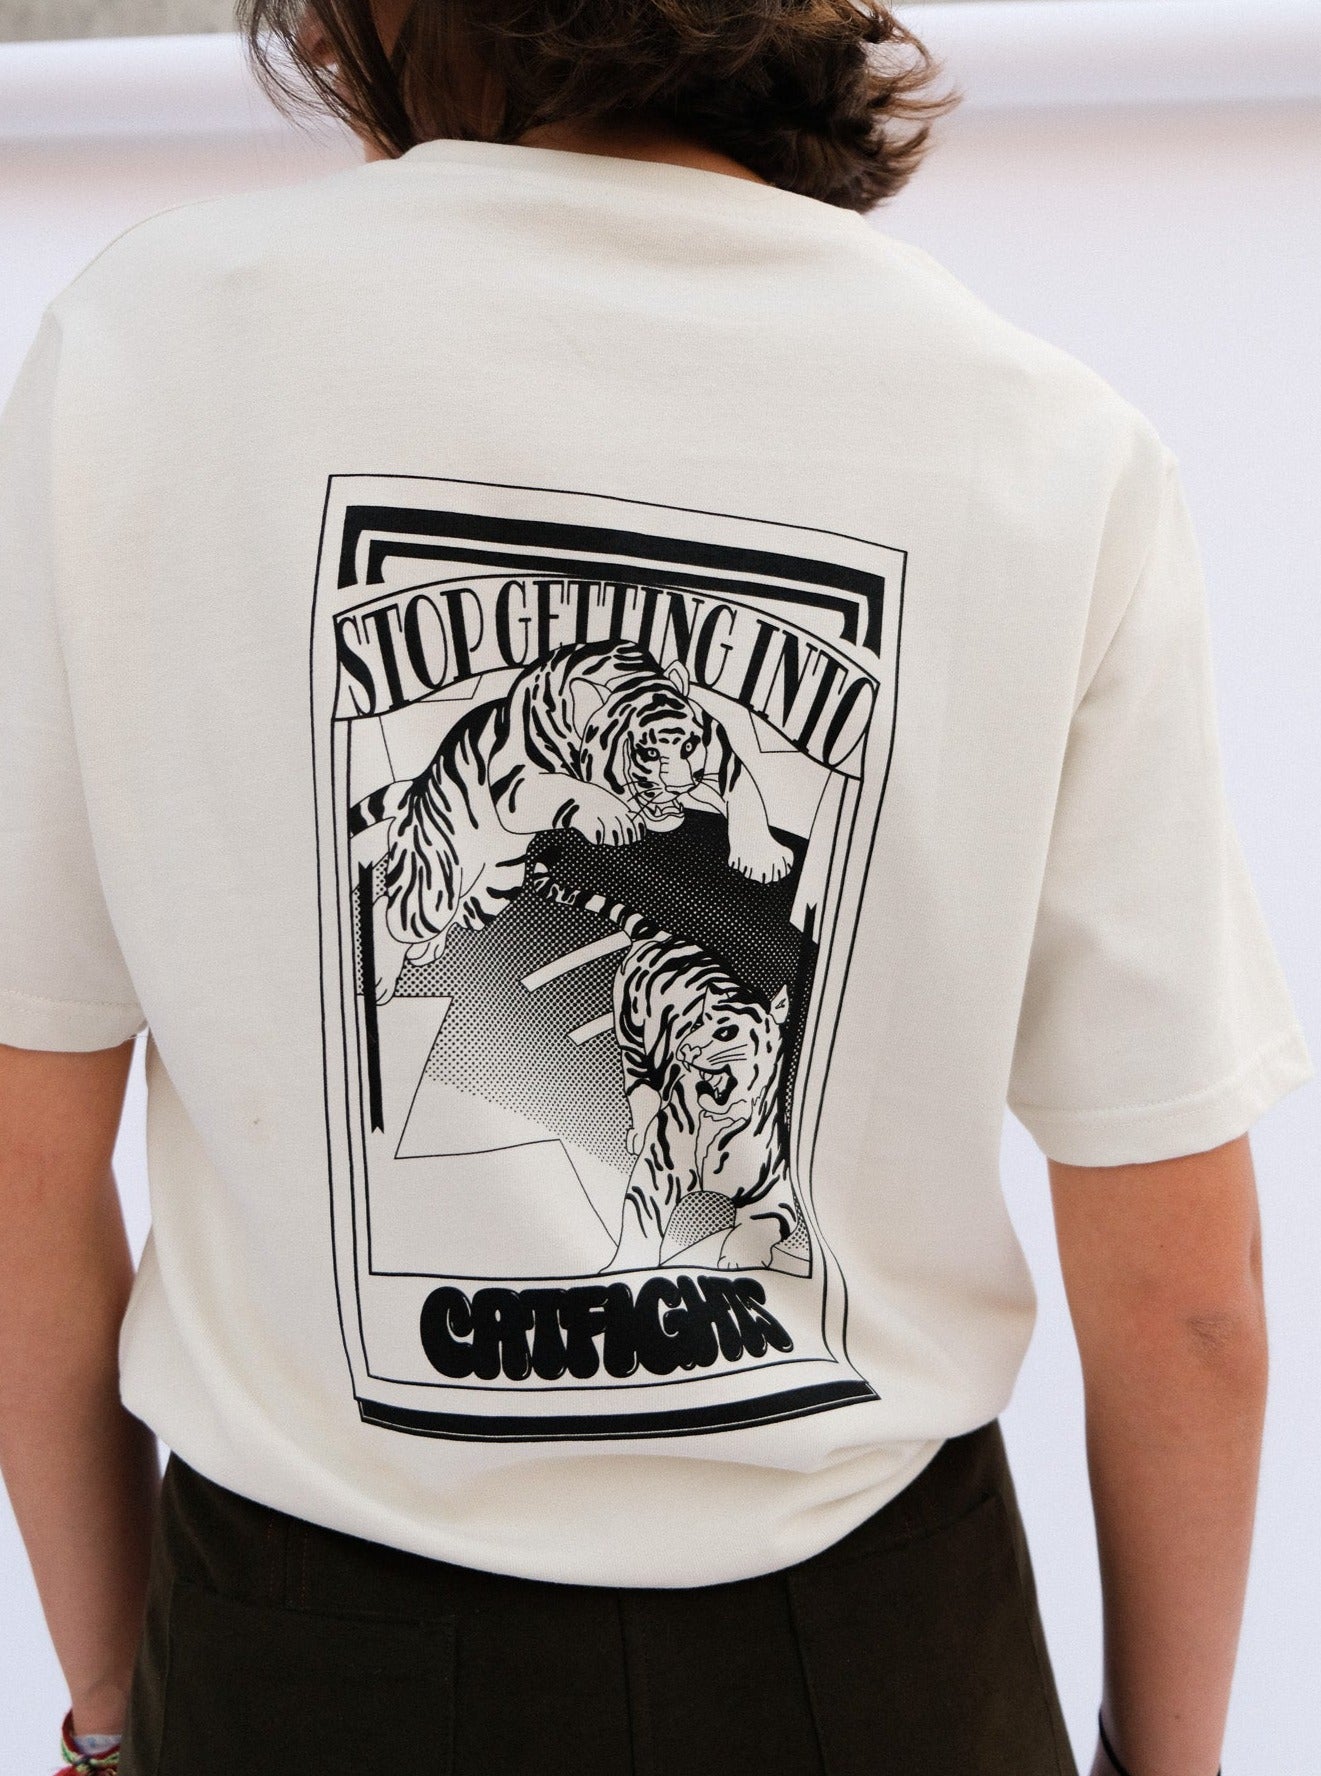 T-shirt, back view, unisex, tiger print